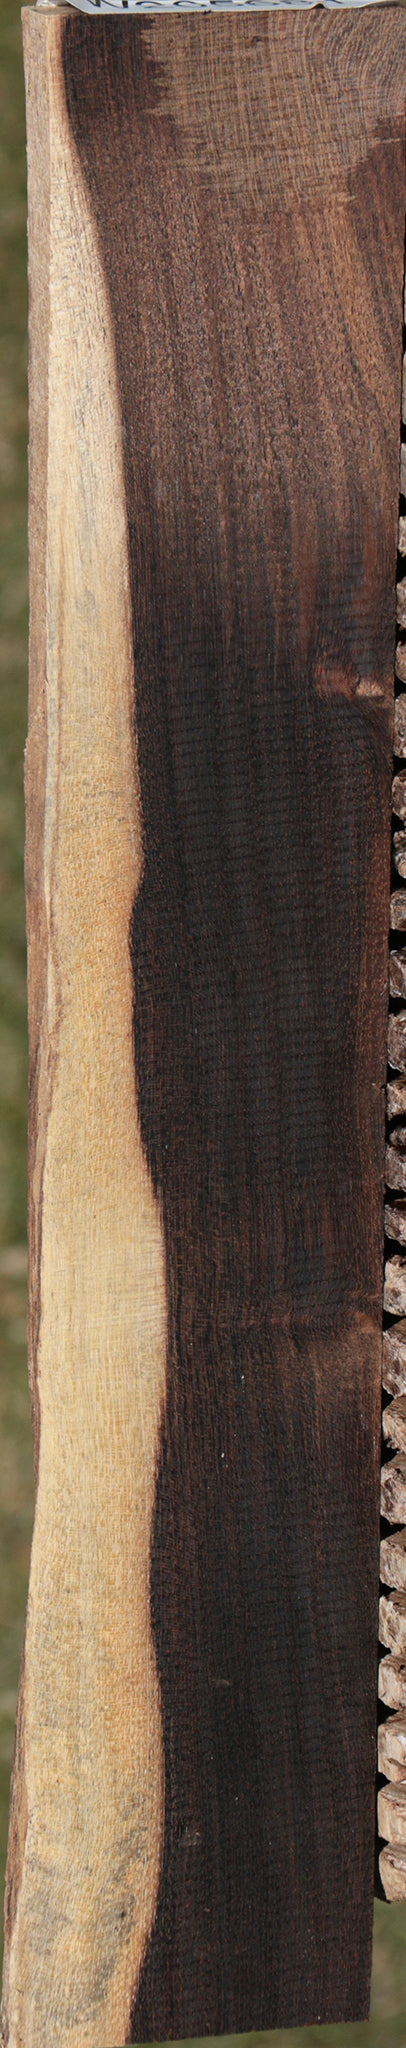 Leadwood Live Edge Micro Lumber